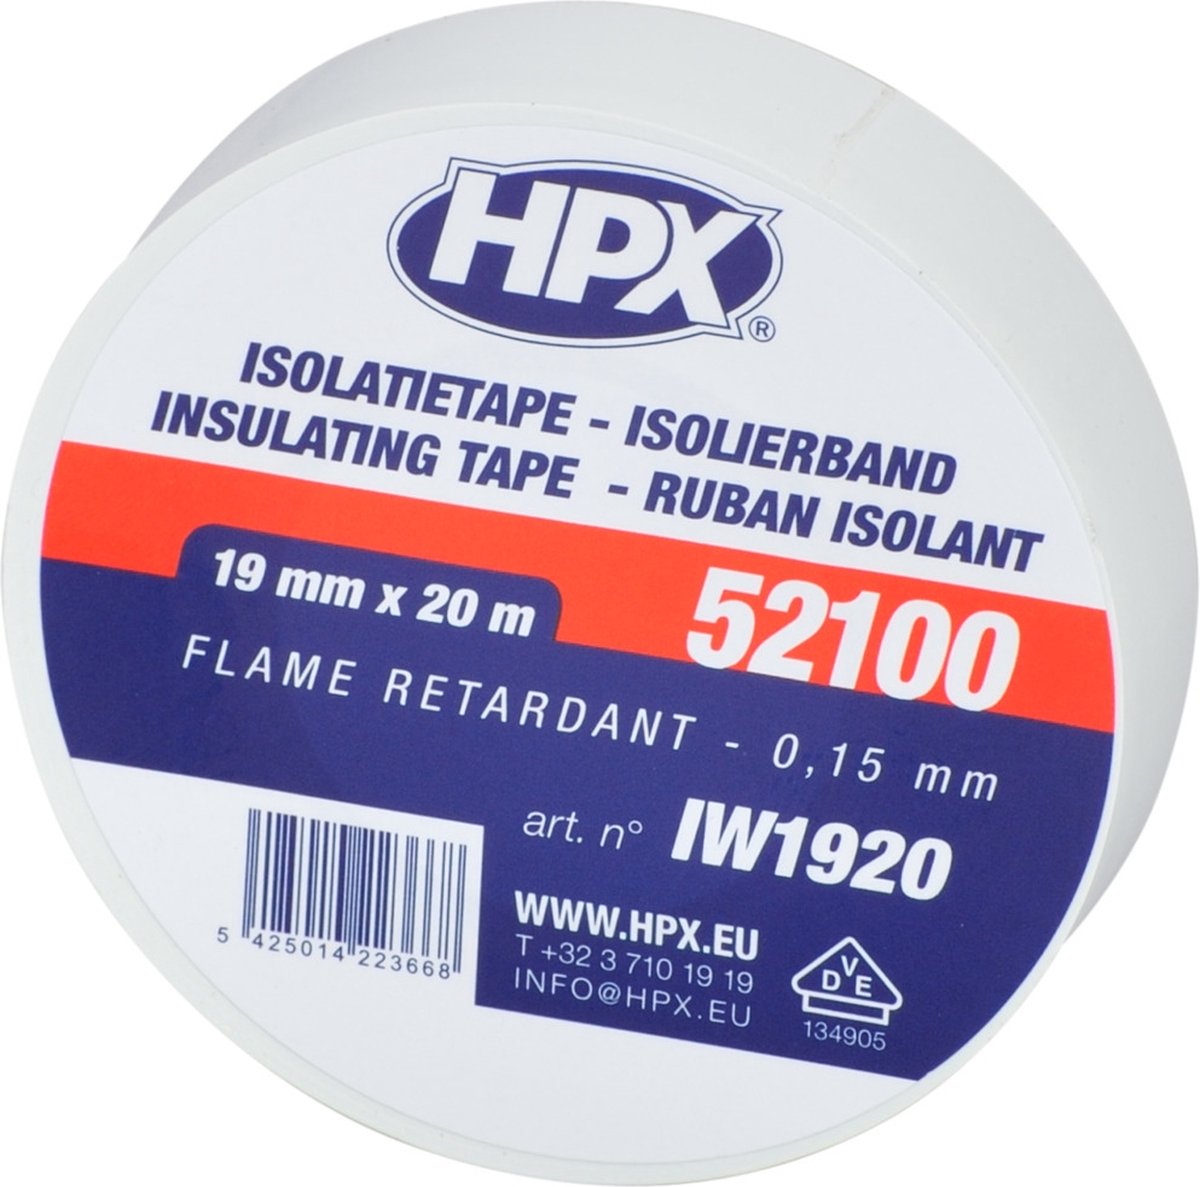 HPX PVC isolatietape VDE | Wit | 19mm x 20m - IW1920